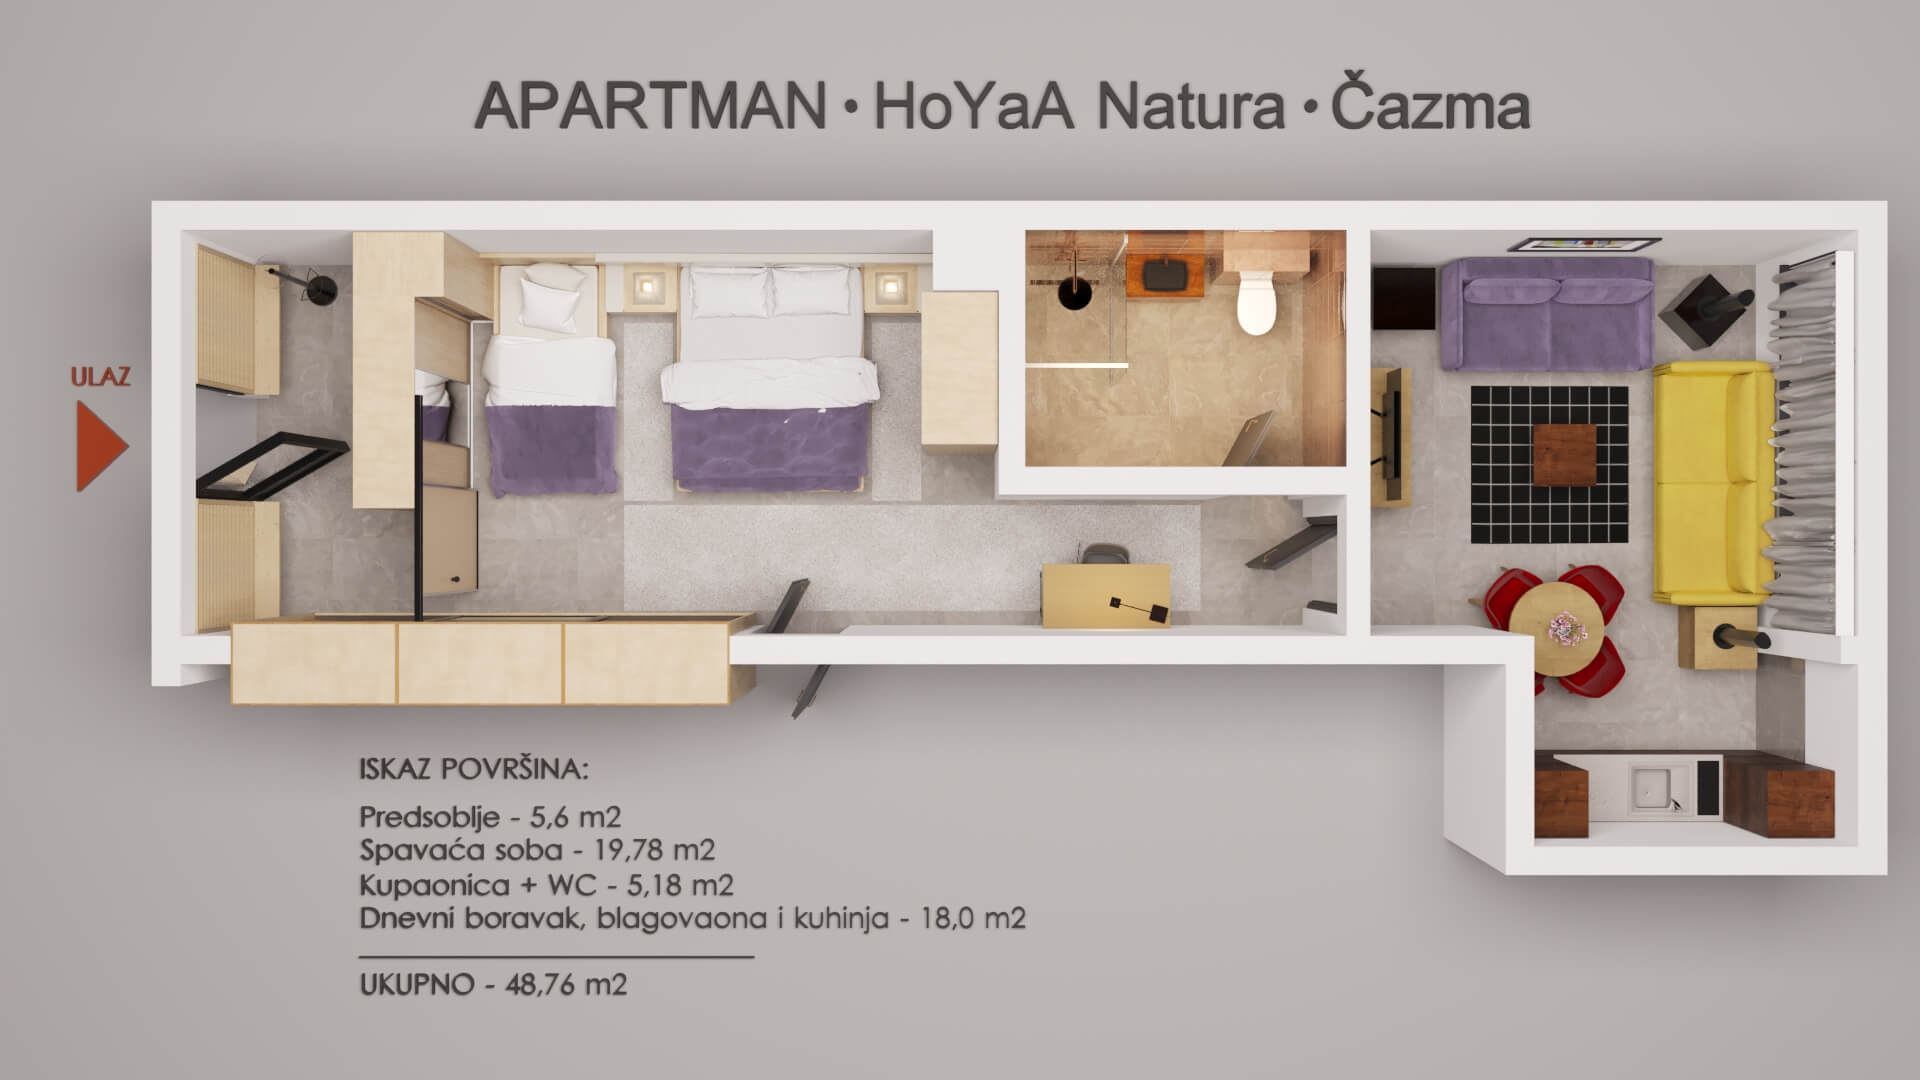 Apartman HoYaA natura